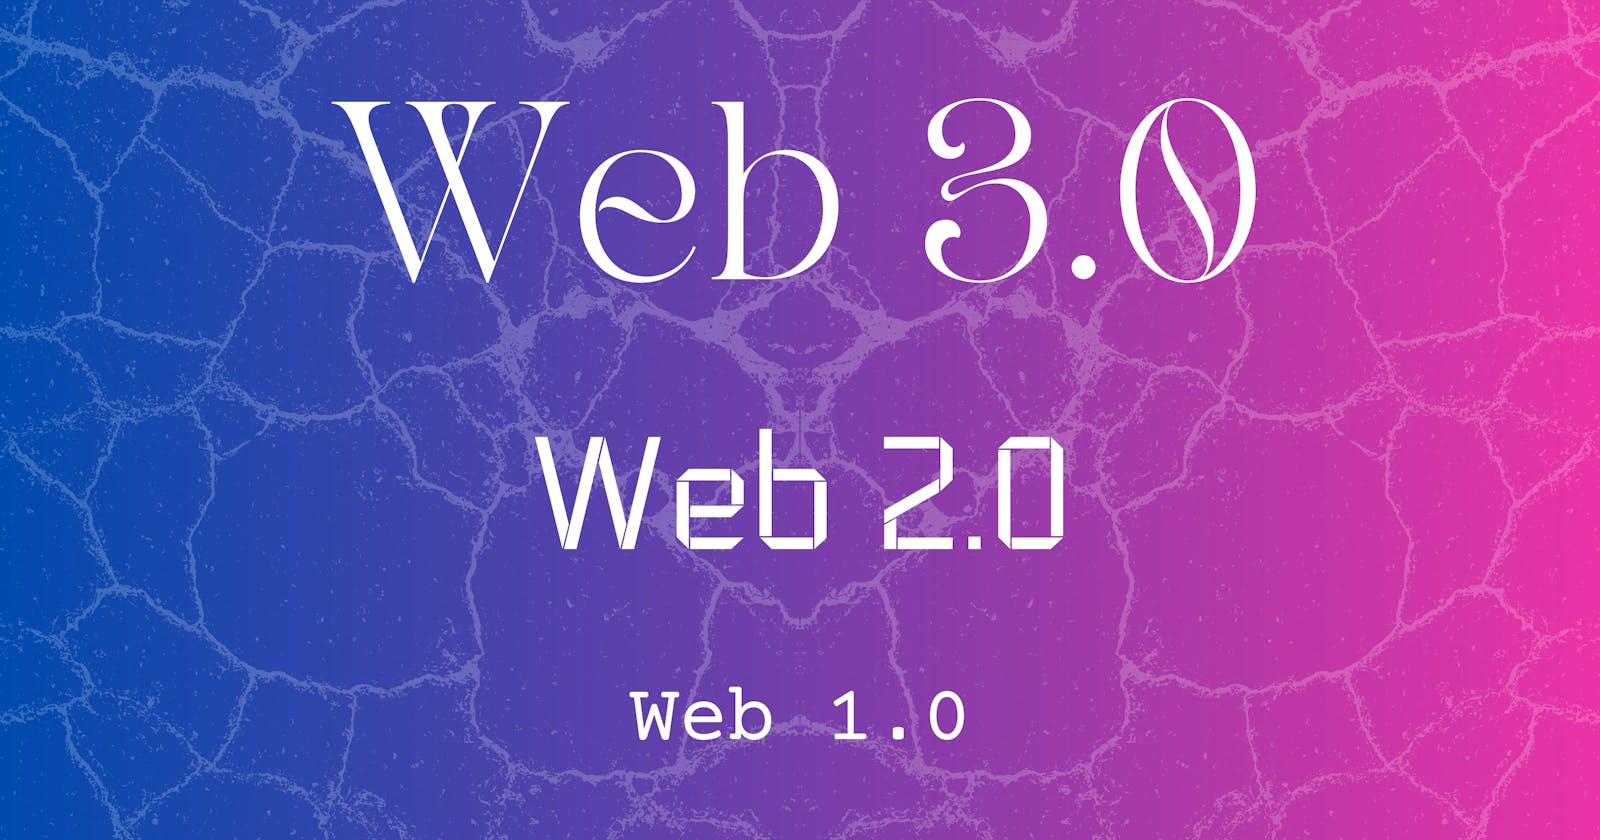 Web 1.0? 
Web 2.0??
Web 3.0???